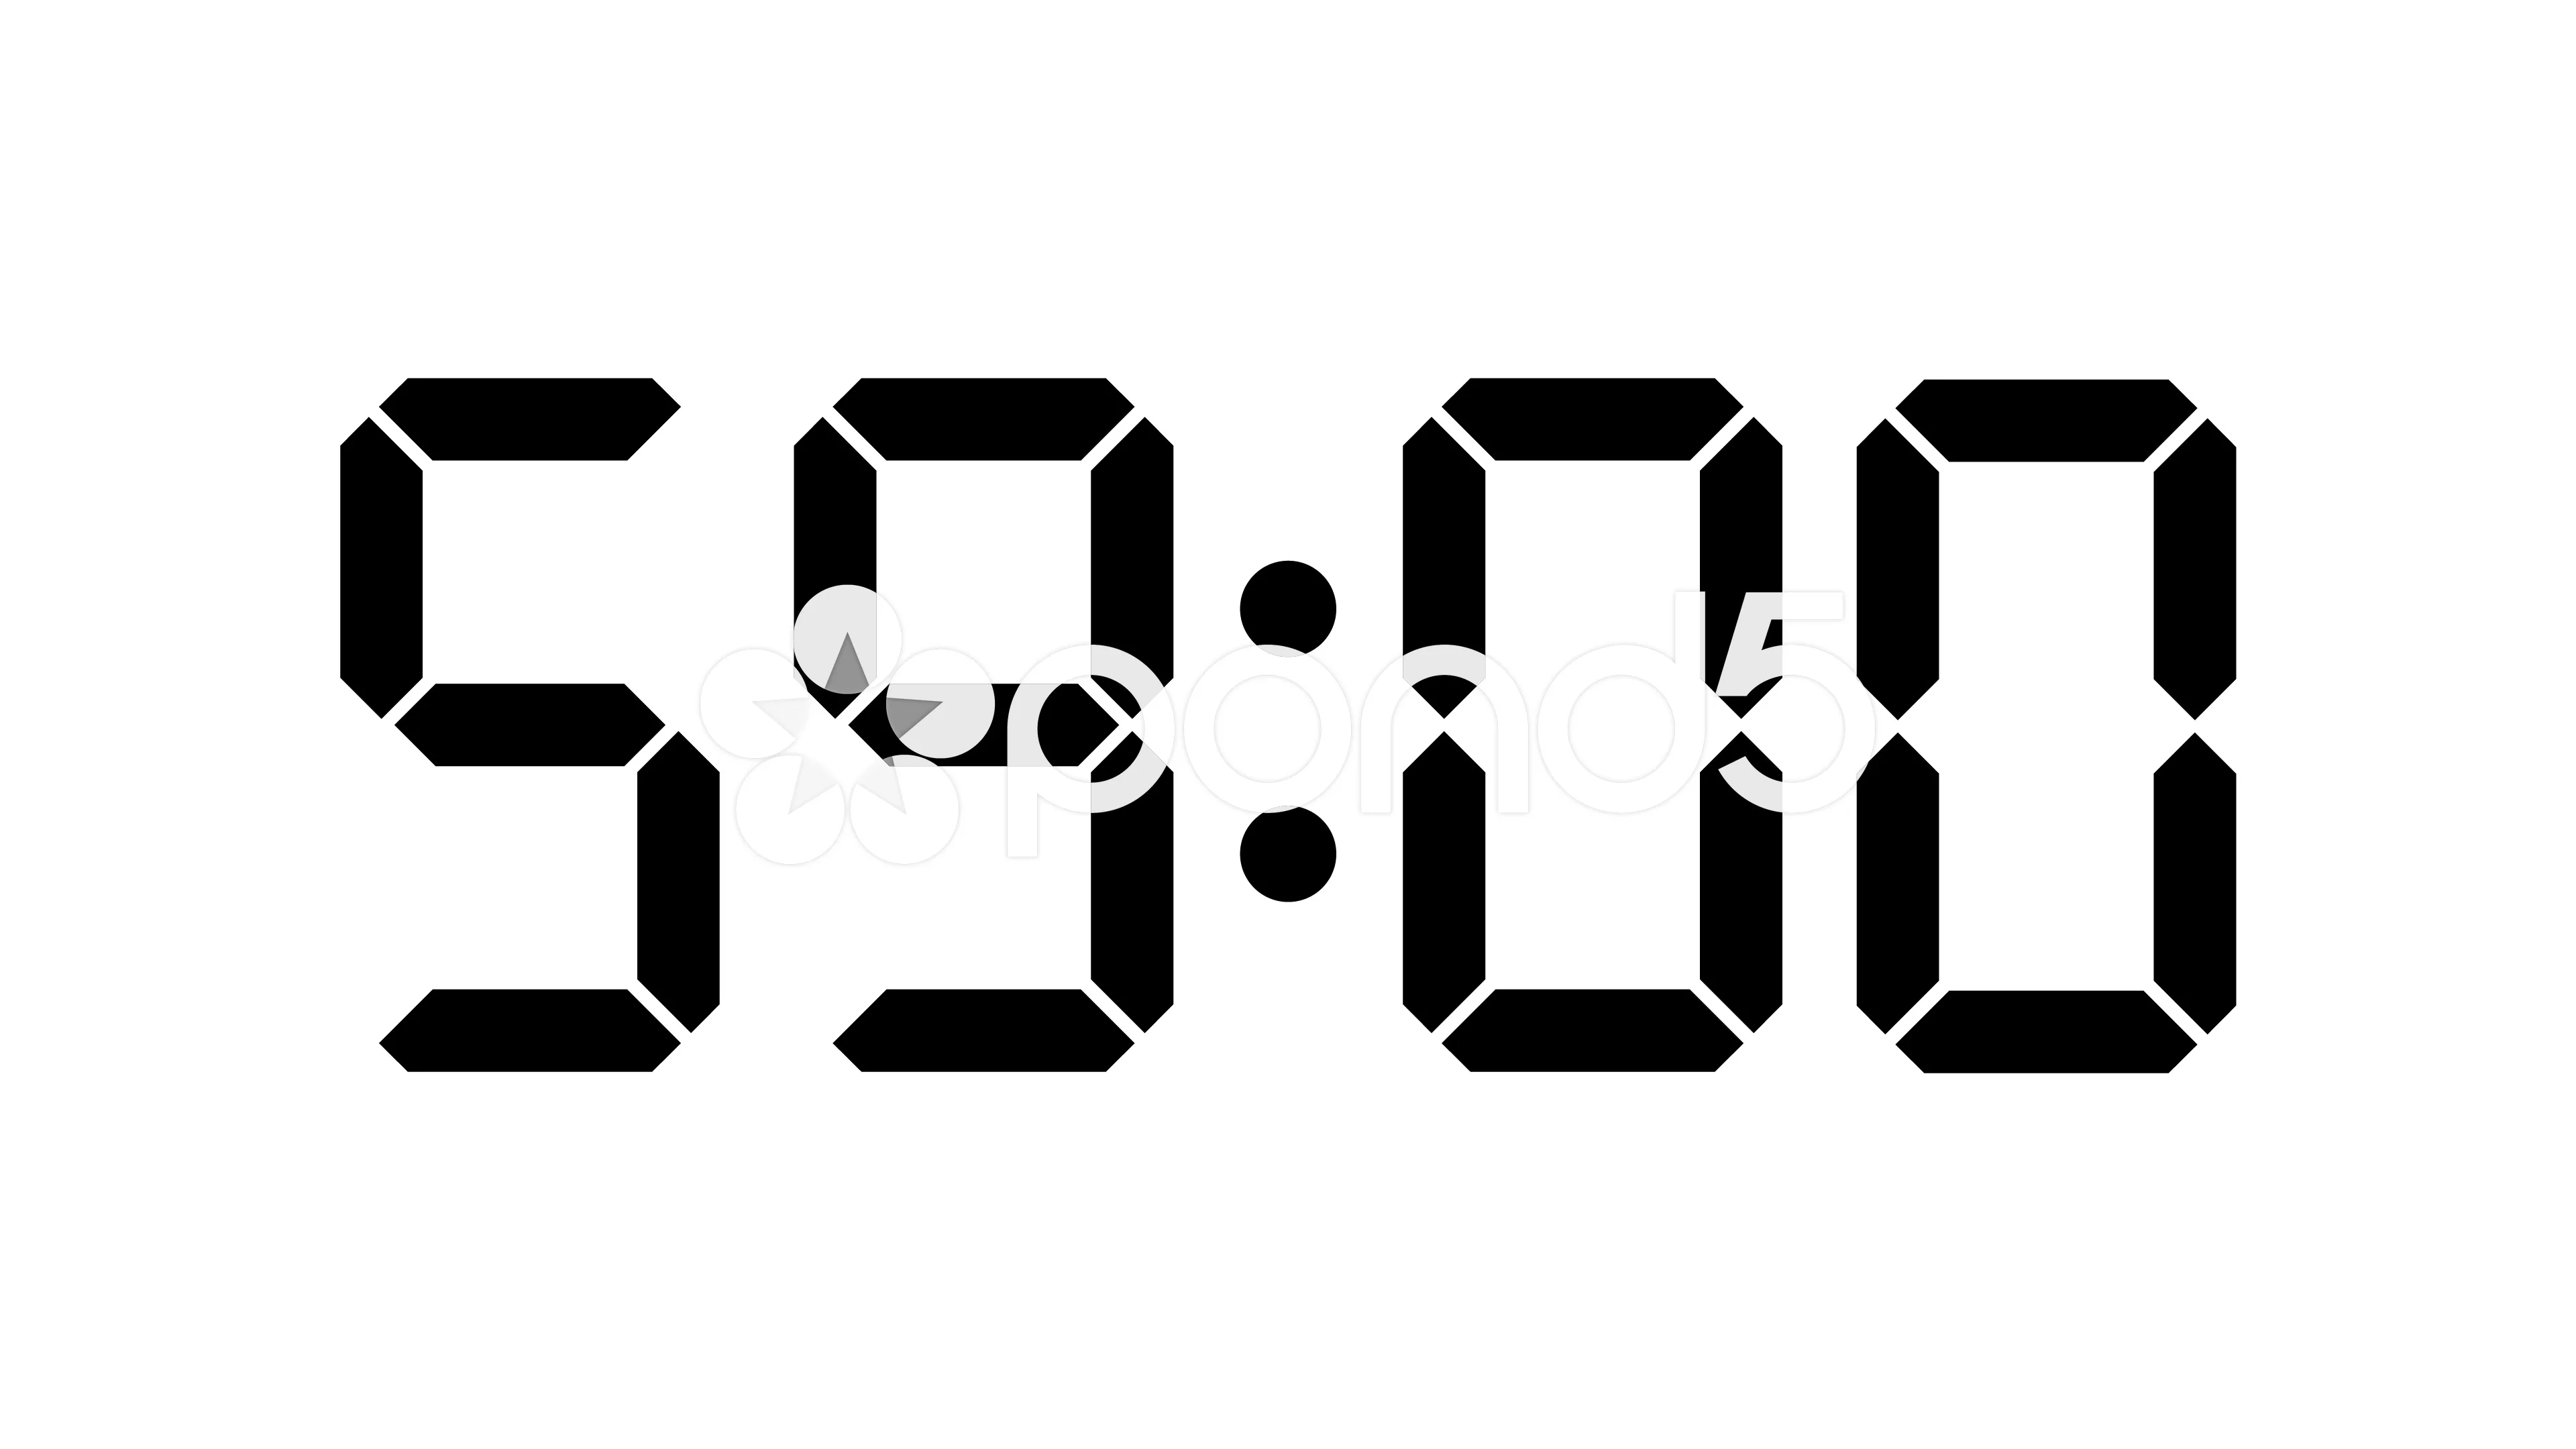 Digital timer of 60 seconds wi... | Stock | Pond5